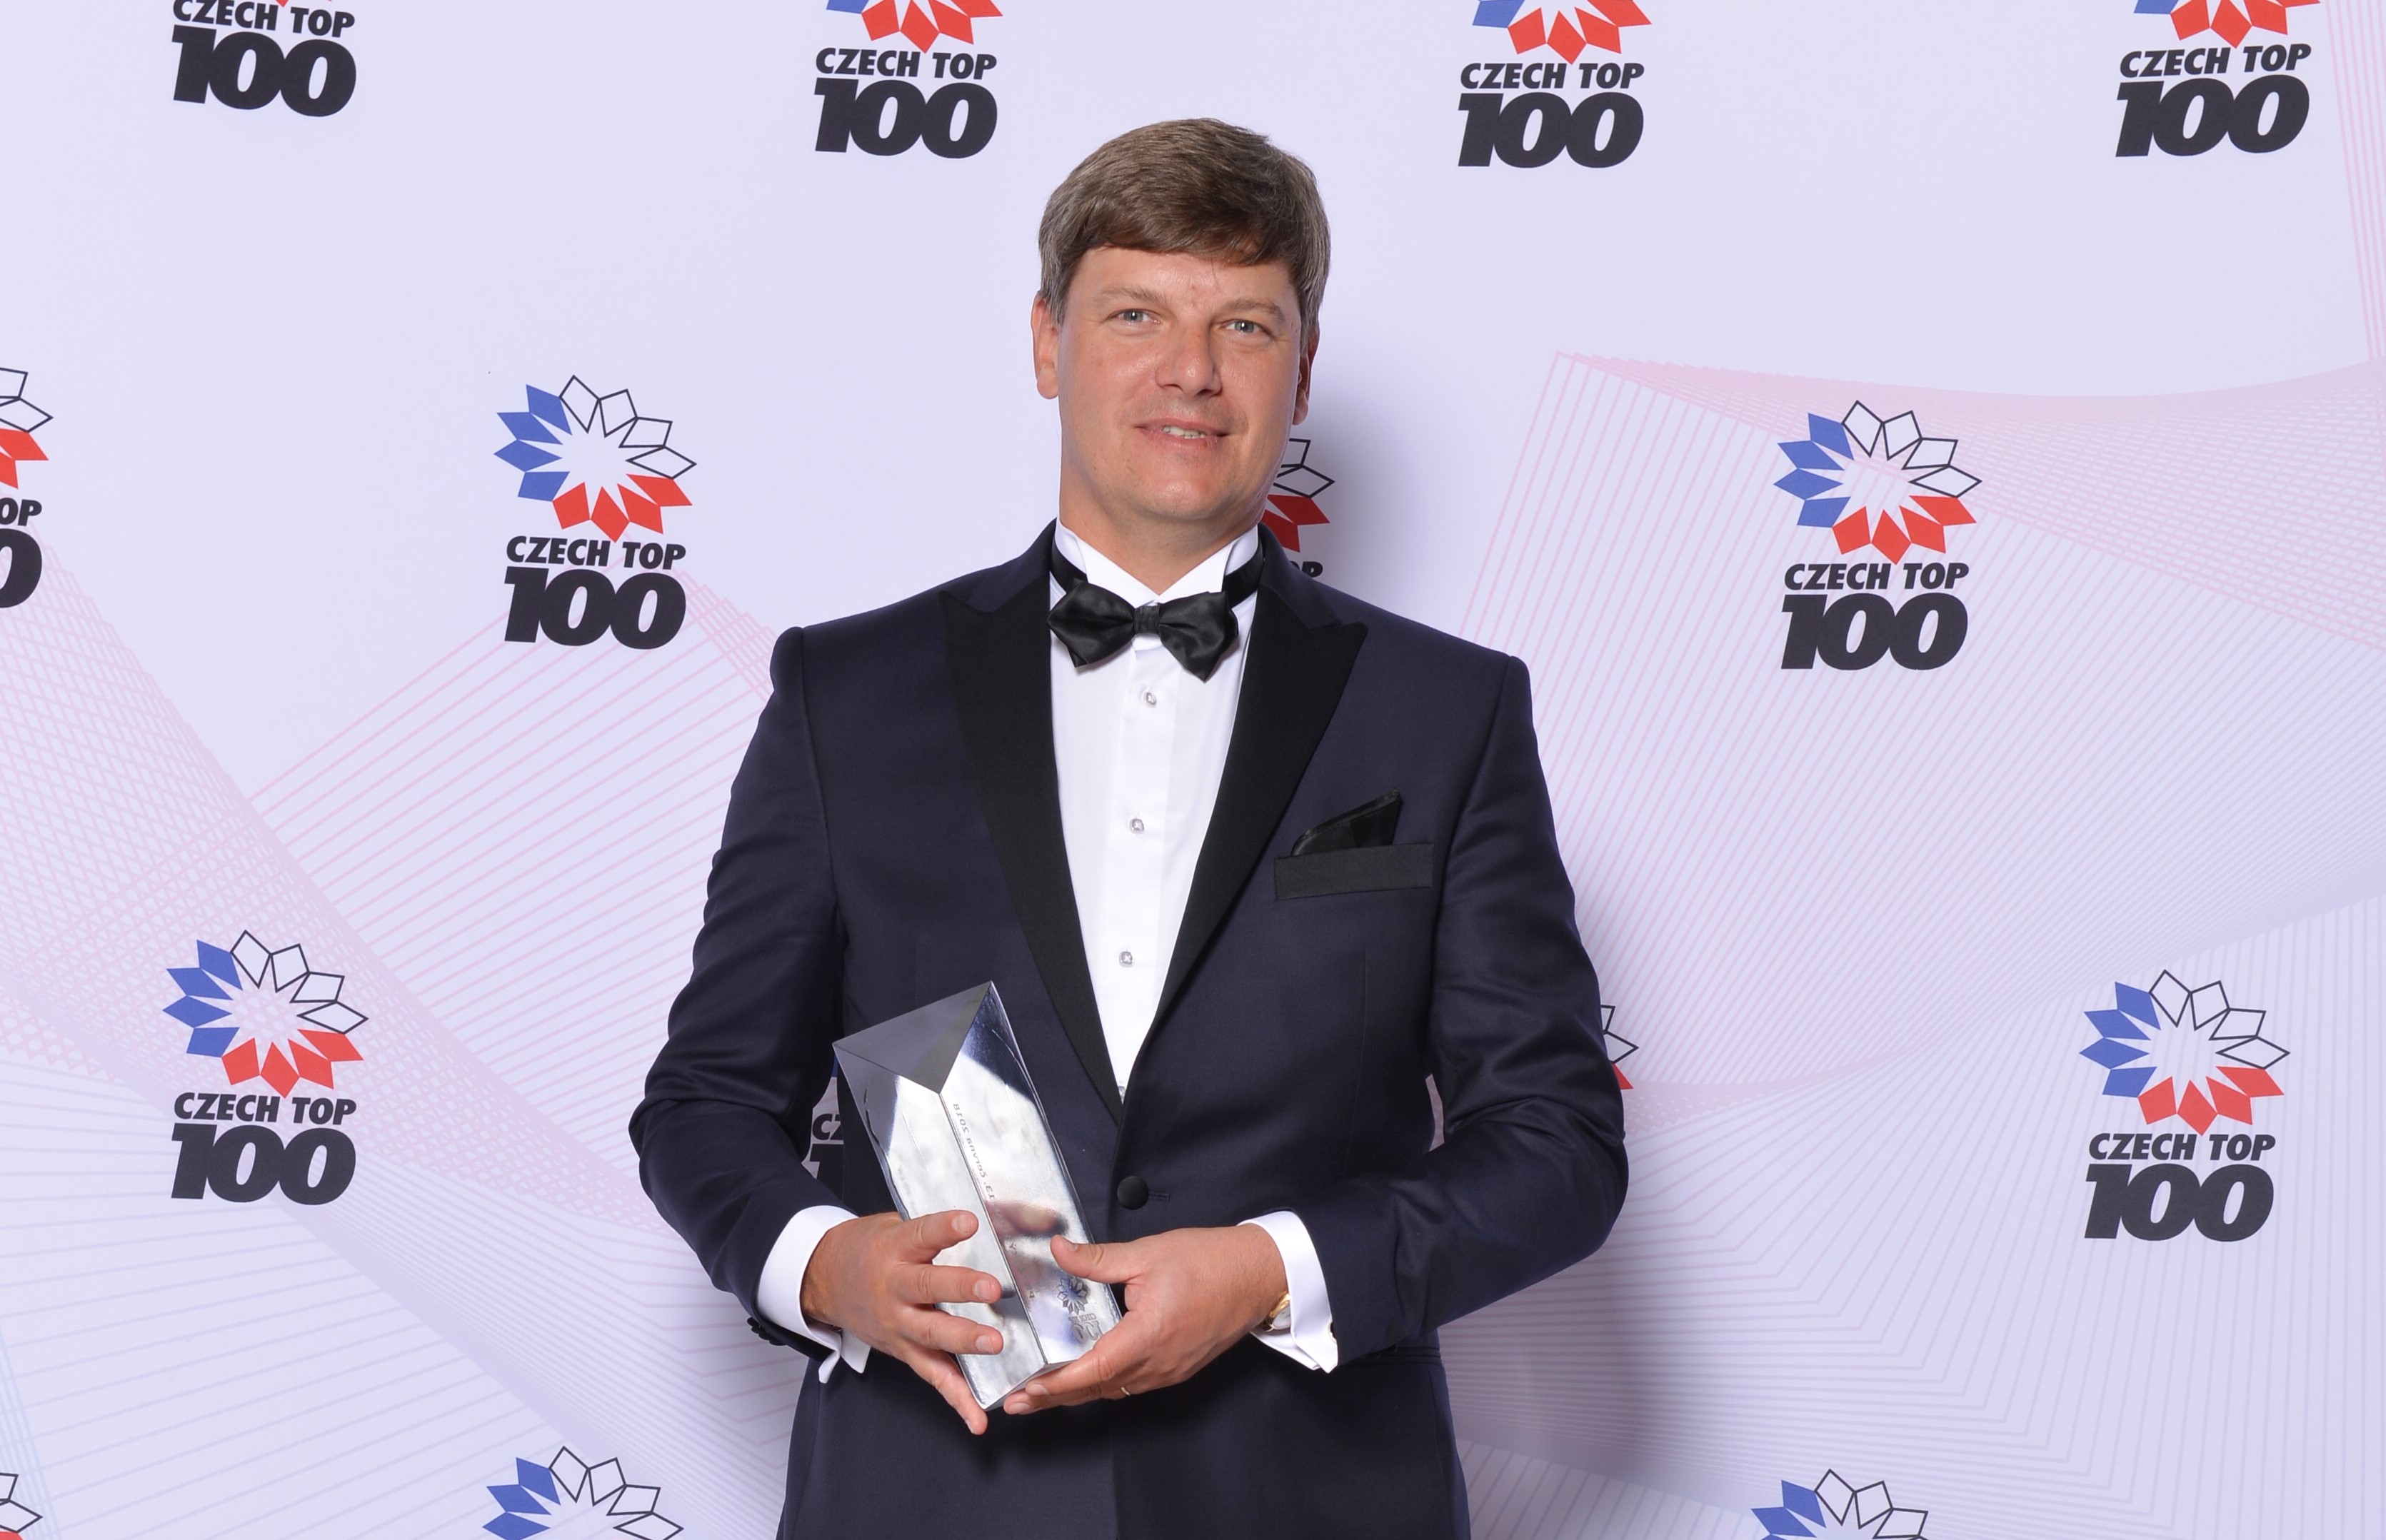 Arete Invest real estate fund wins a Czech Top 100 Award